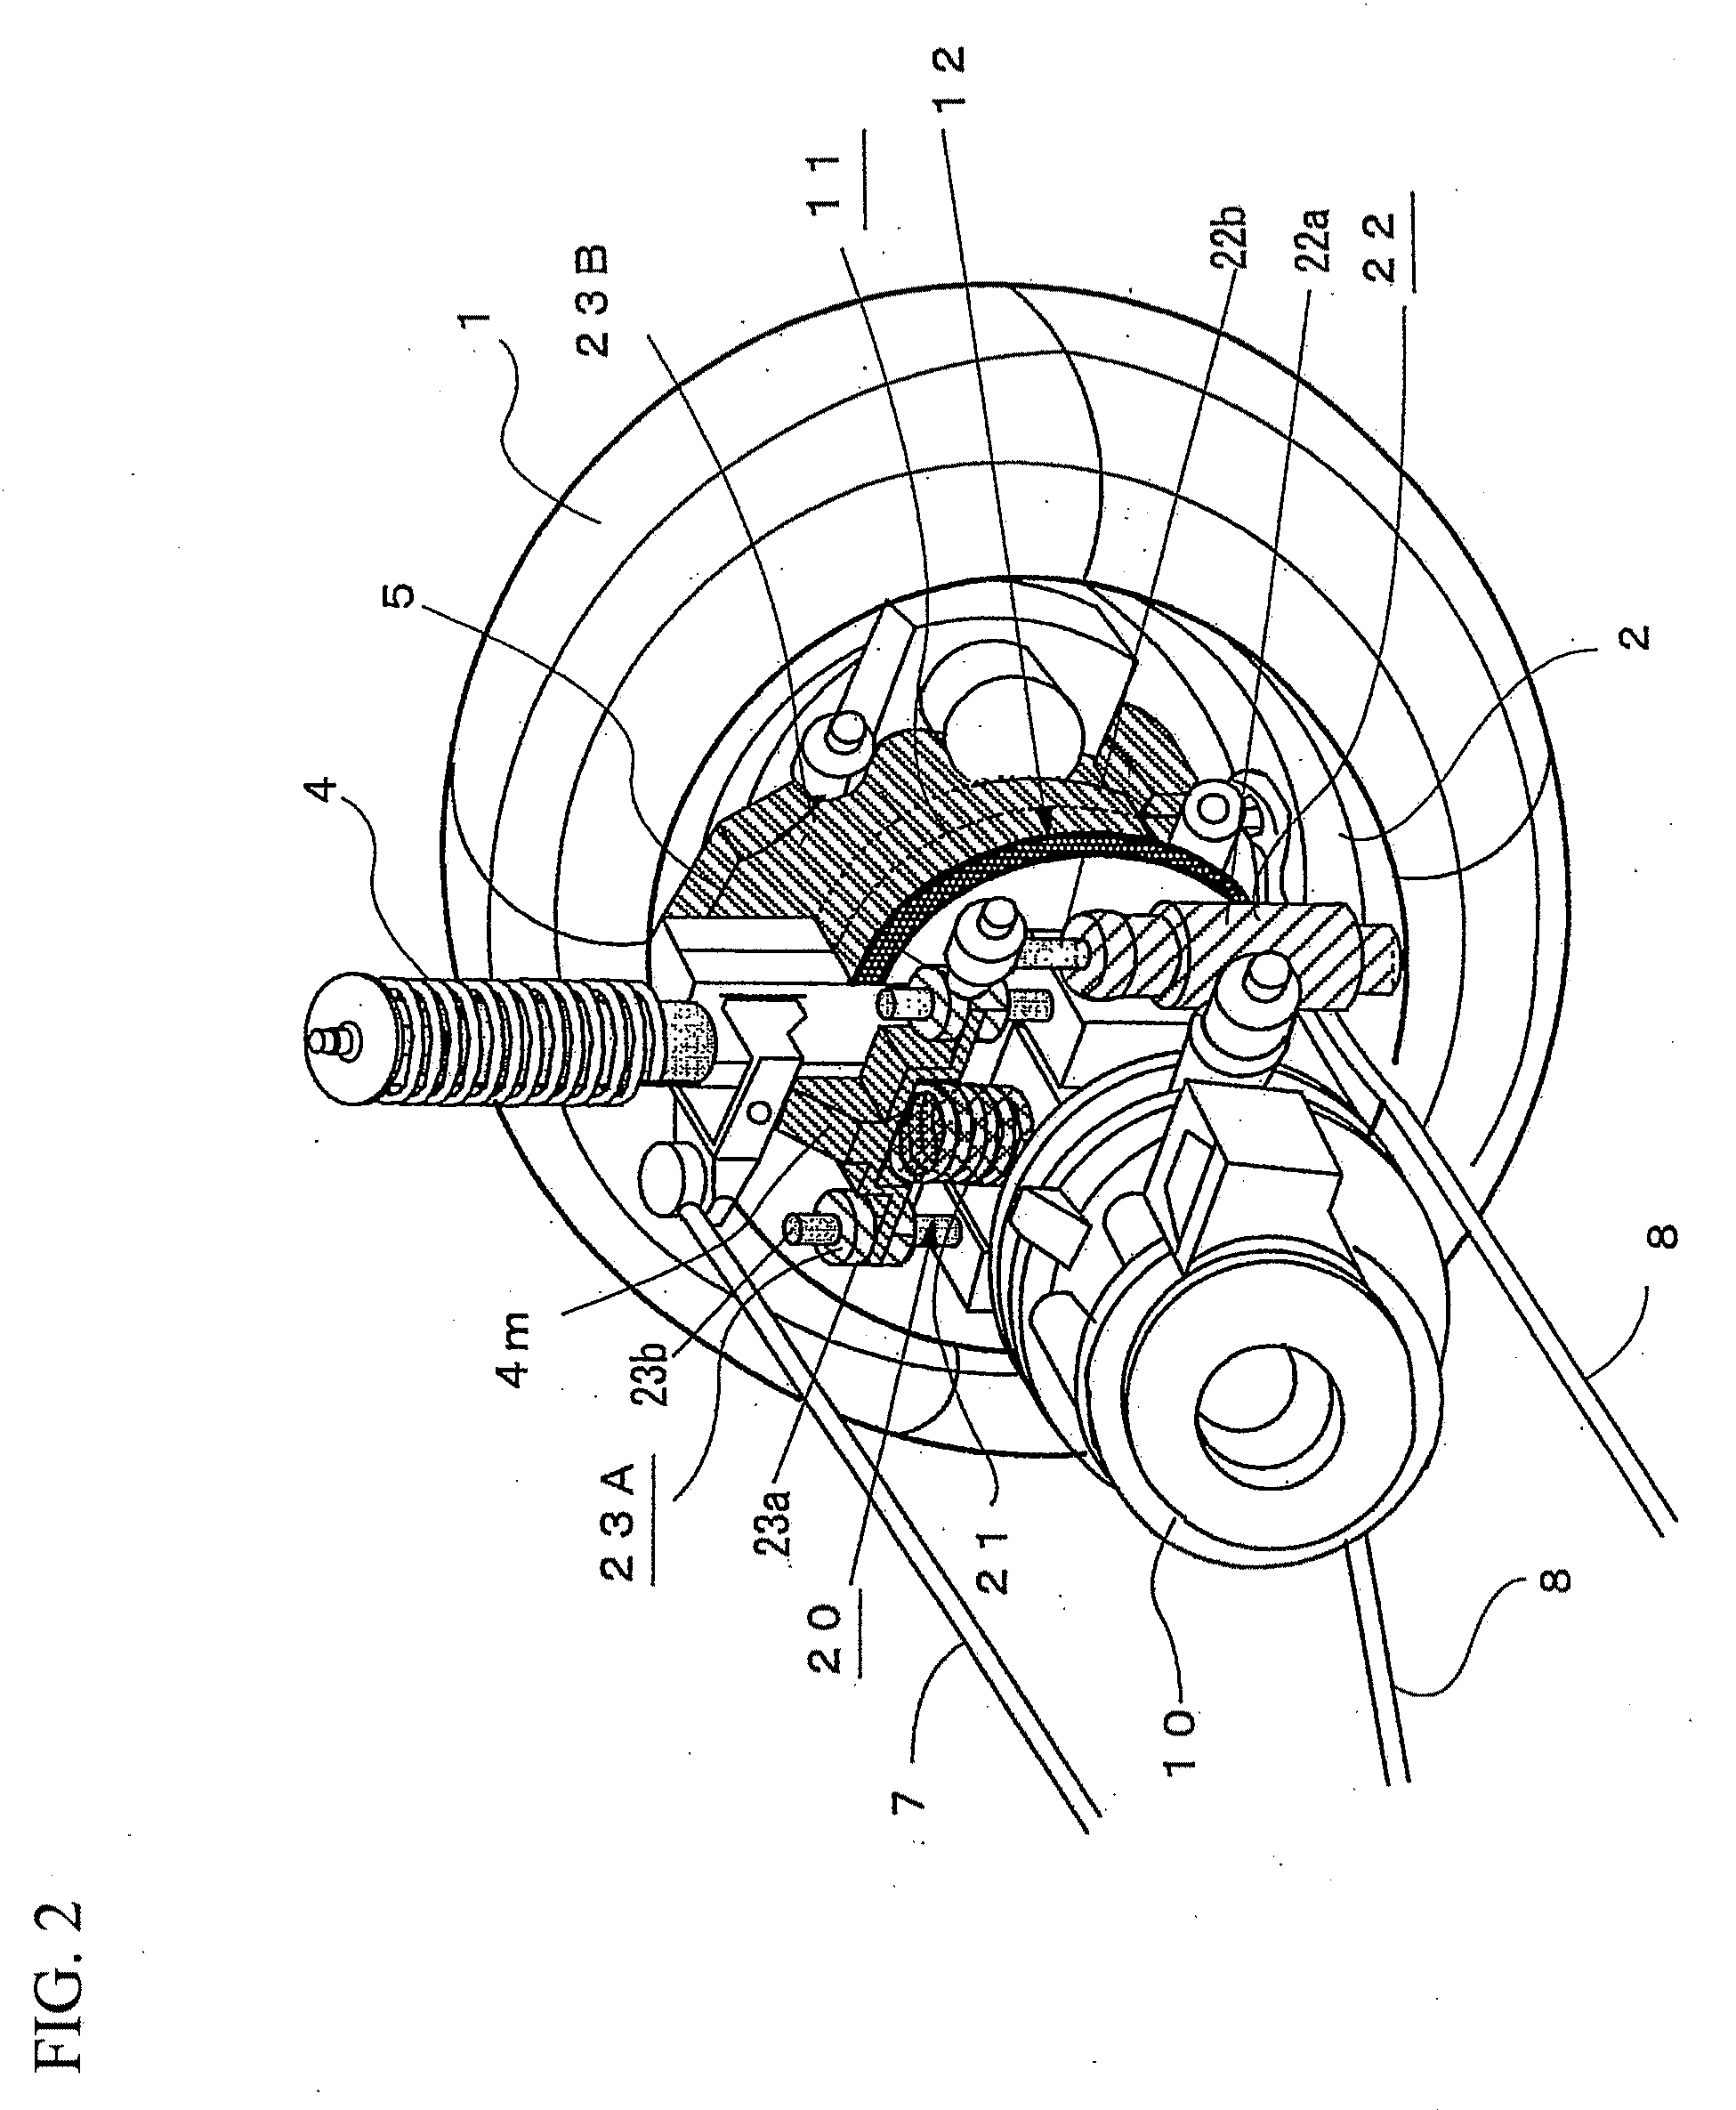 In-wheel motor system